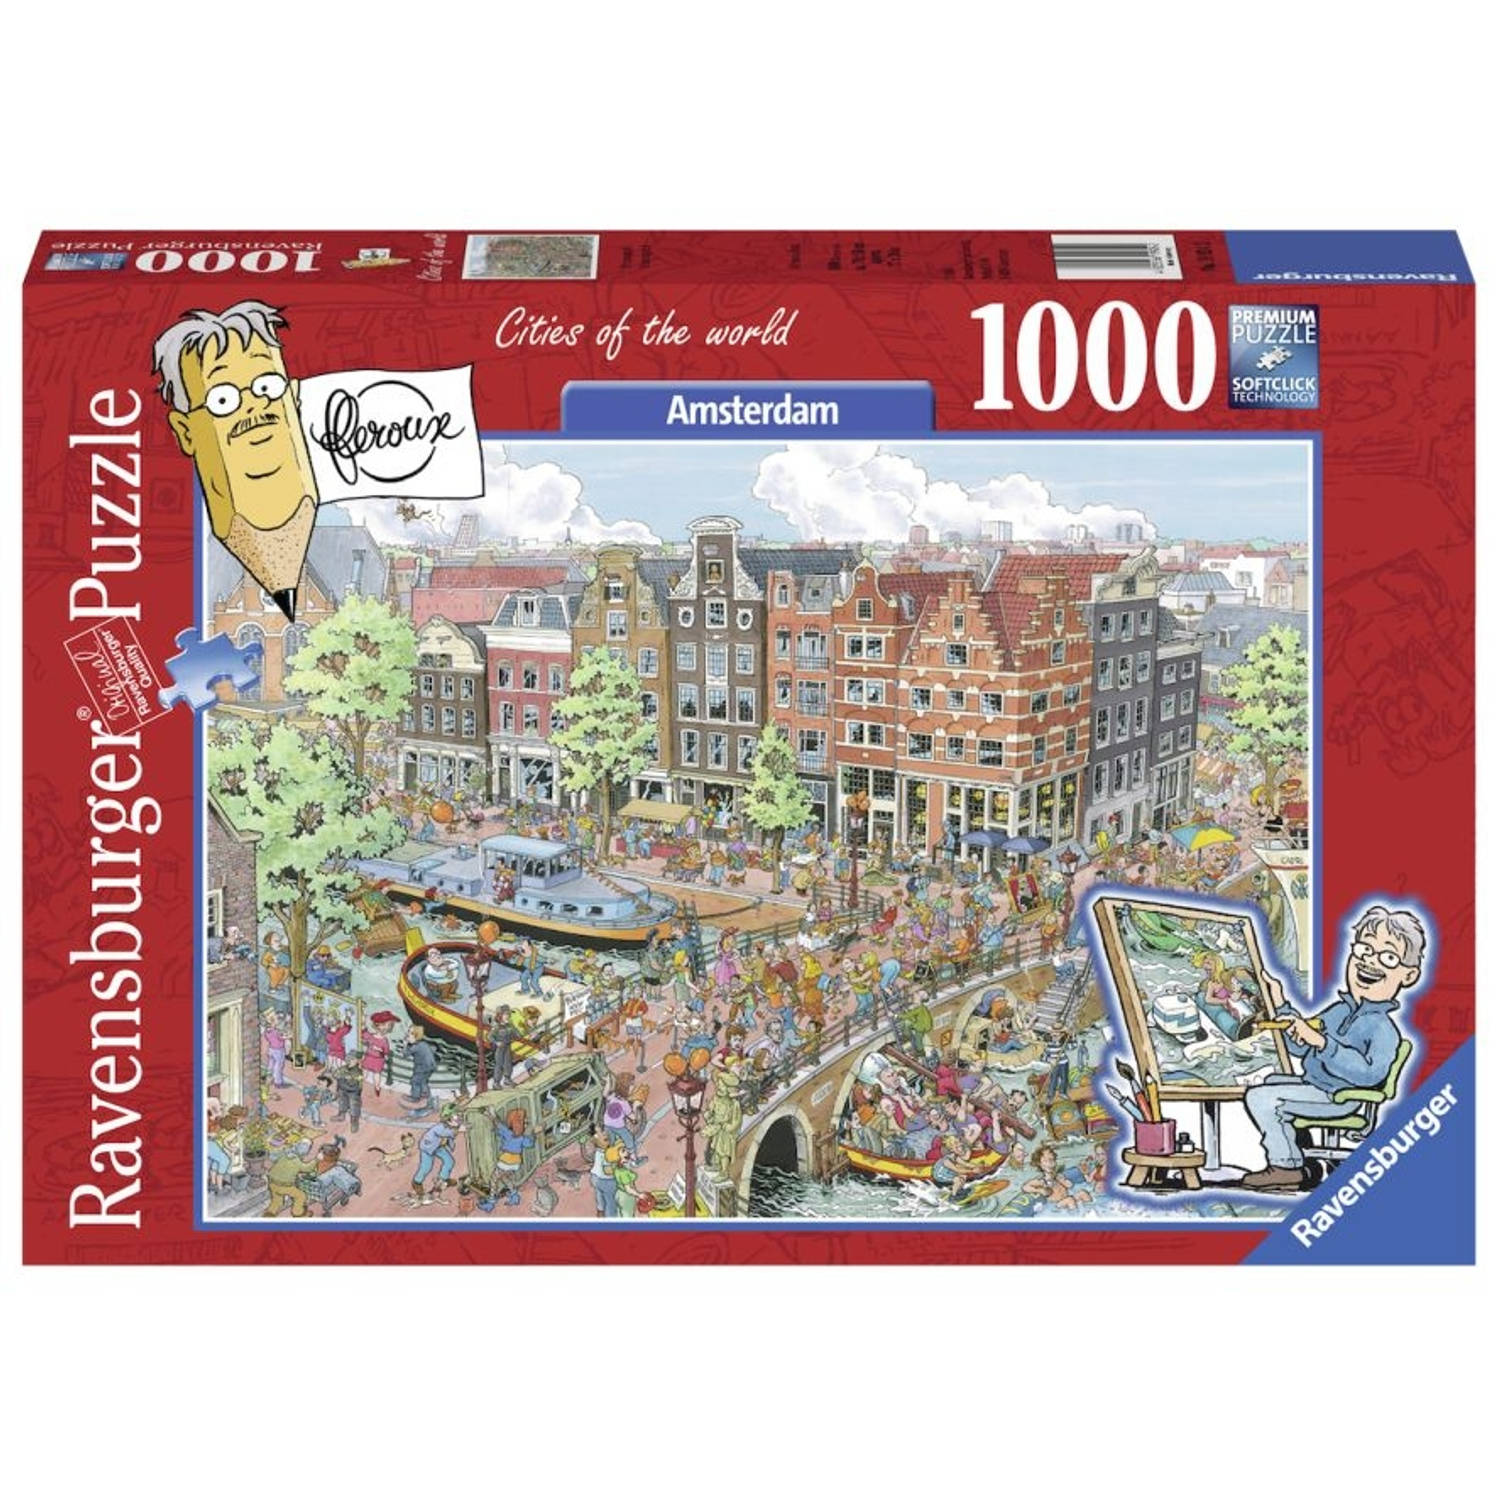 Inactief Belang Meander Ravensburger puzzel Fleroux Amsterdam - 1000 stukjes | Blokker